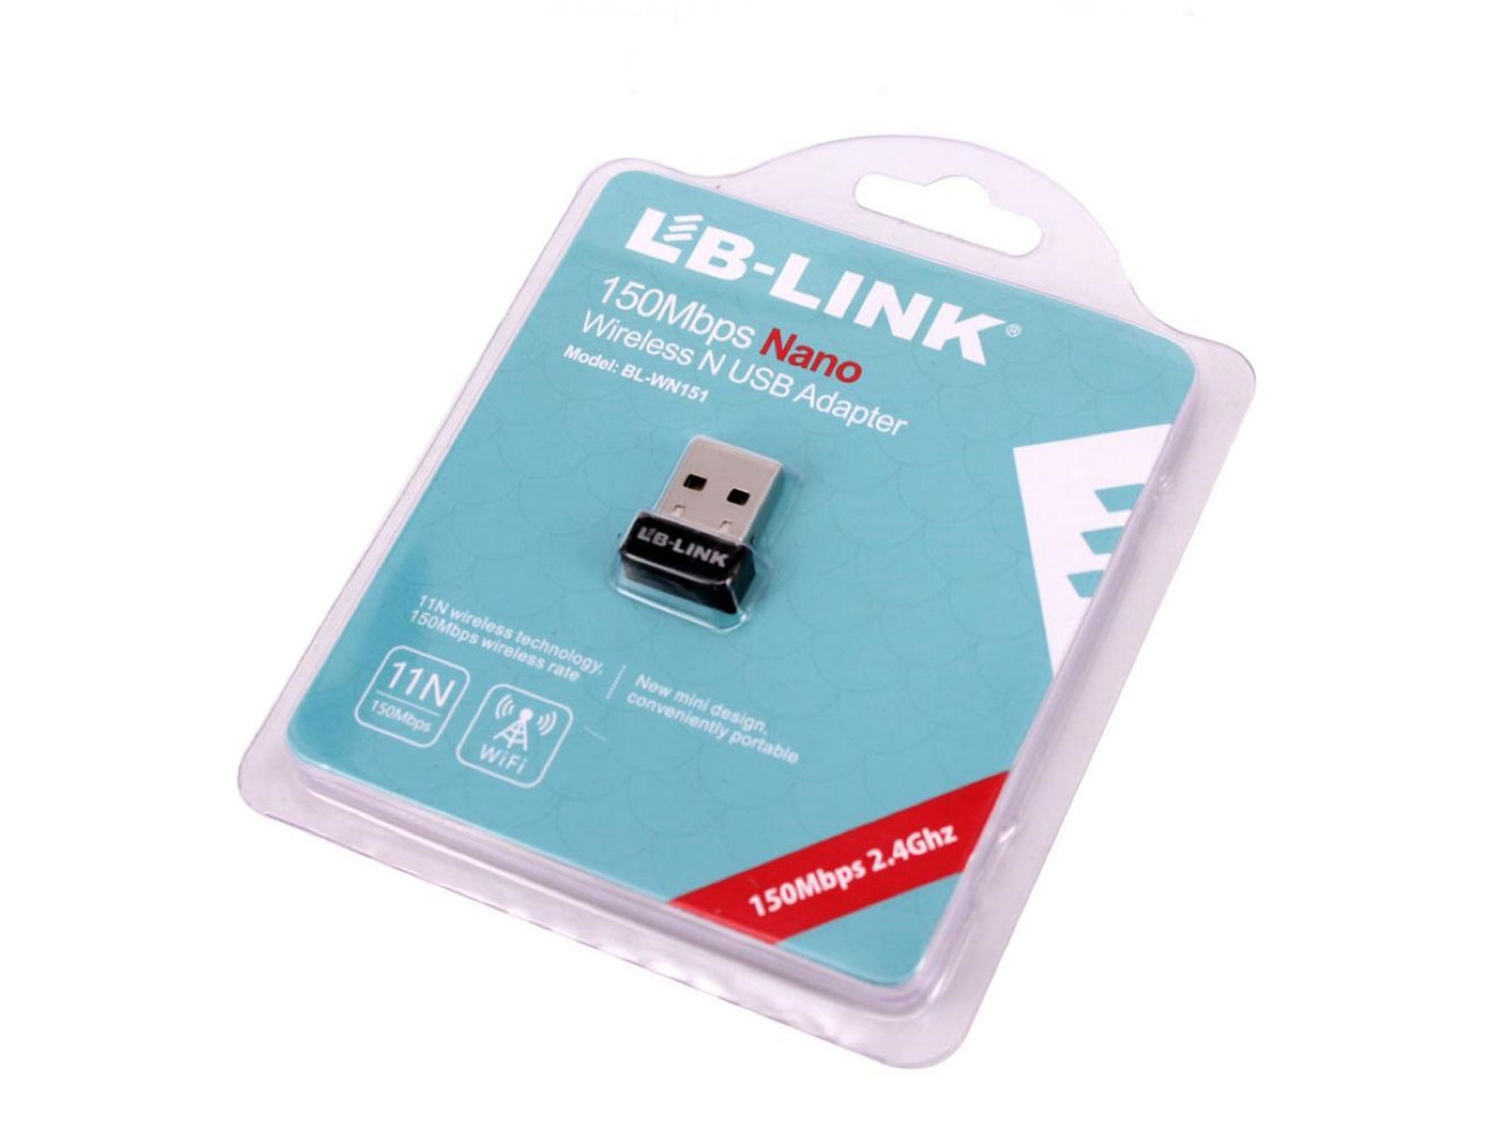 LB-Link 150Mbps NANO WIRELESS N USB ADAPTER